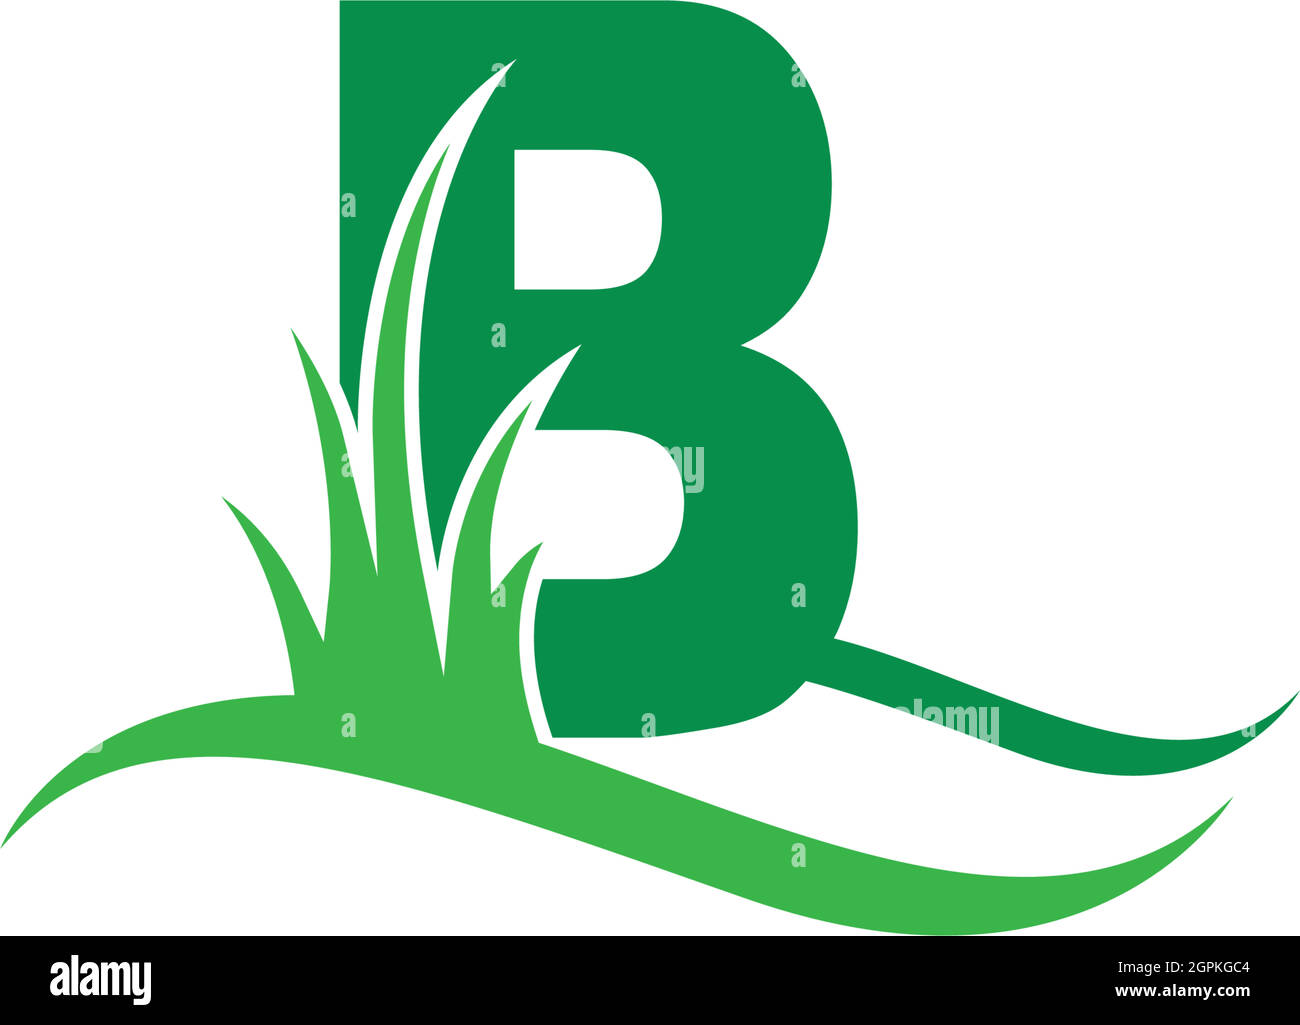 https://c8.alamy.com/comp/2GPKGC4/letter-b-behind-a-green-grass-icon-logo-design-vector-2GPKGC4.jpg